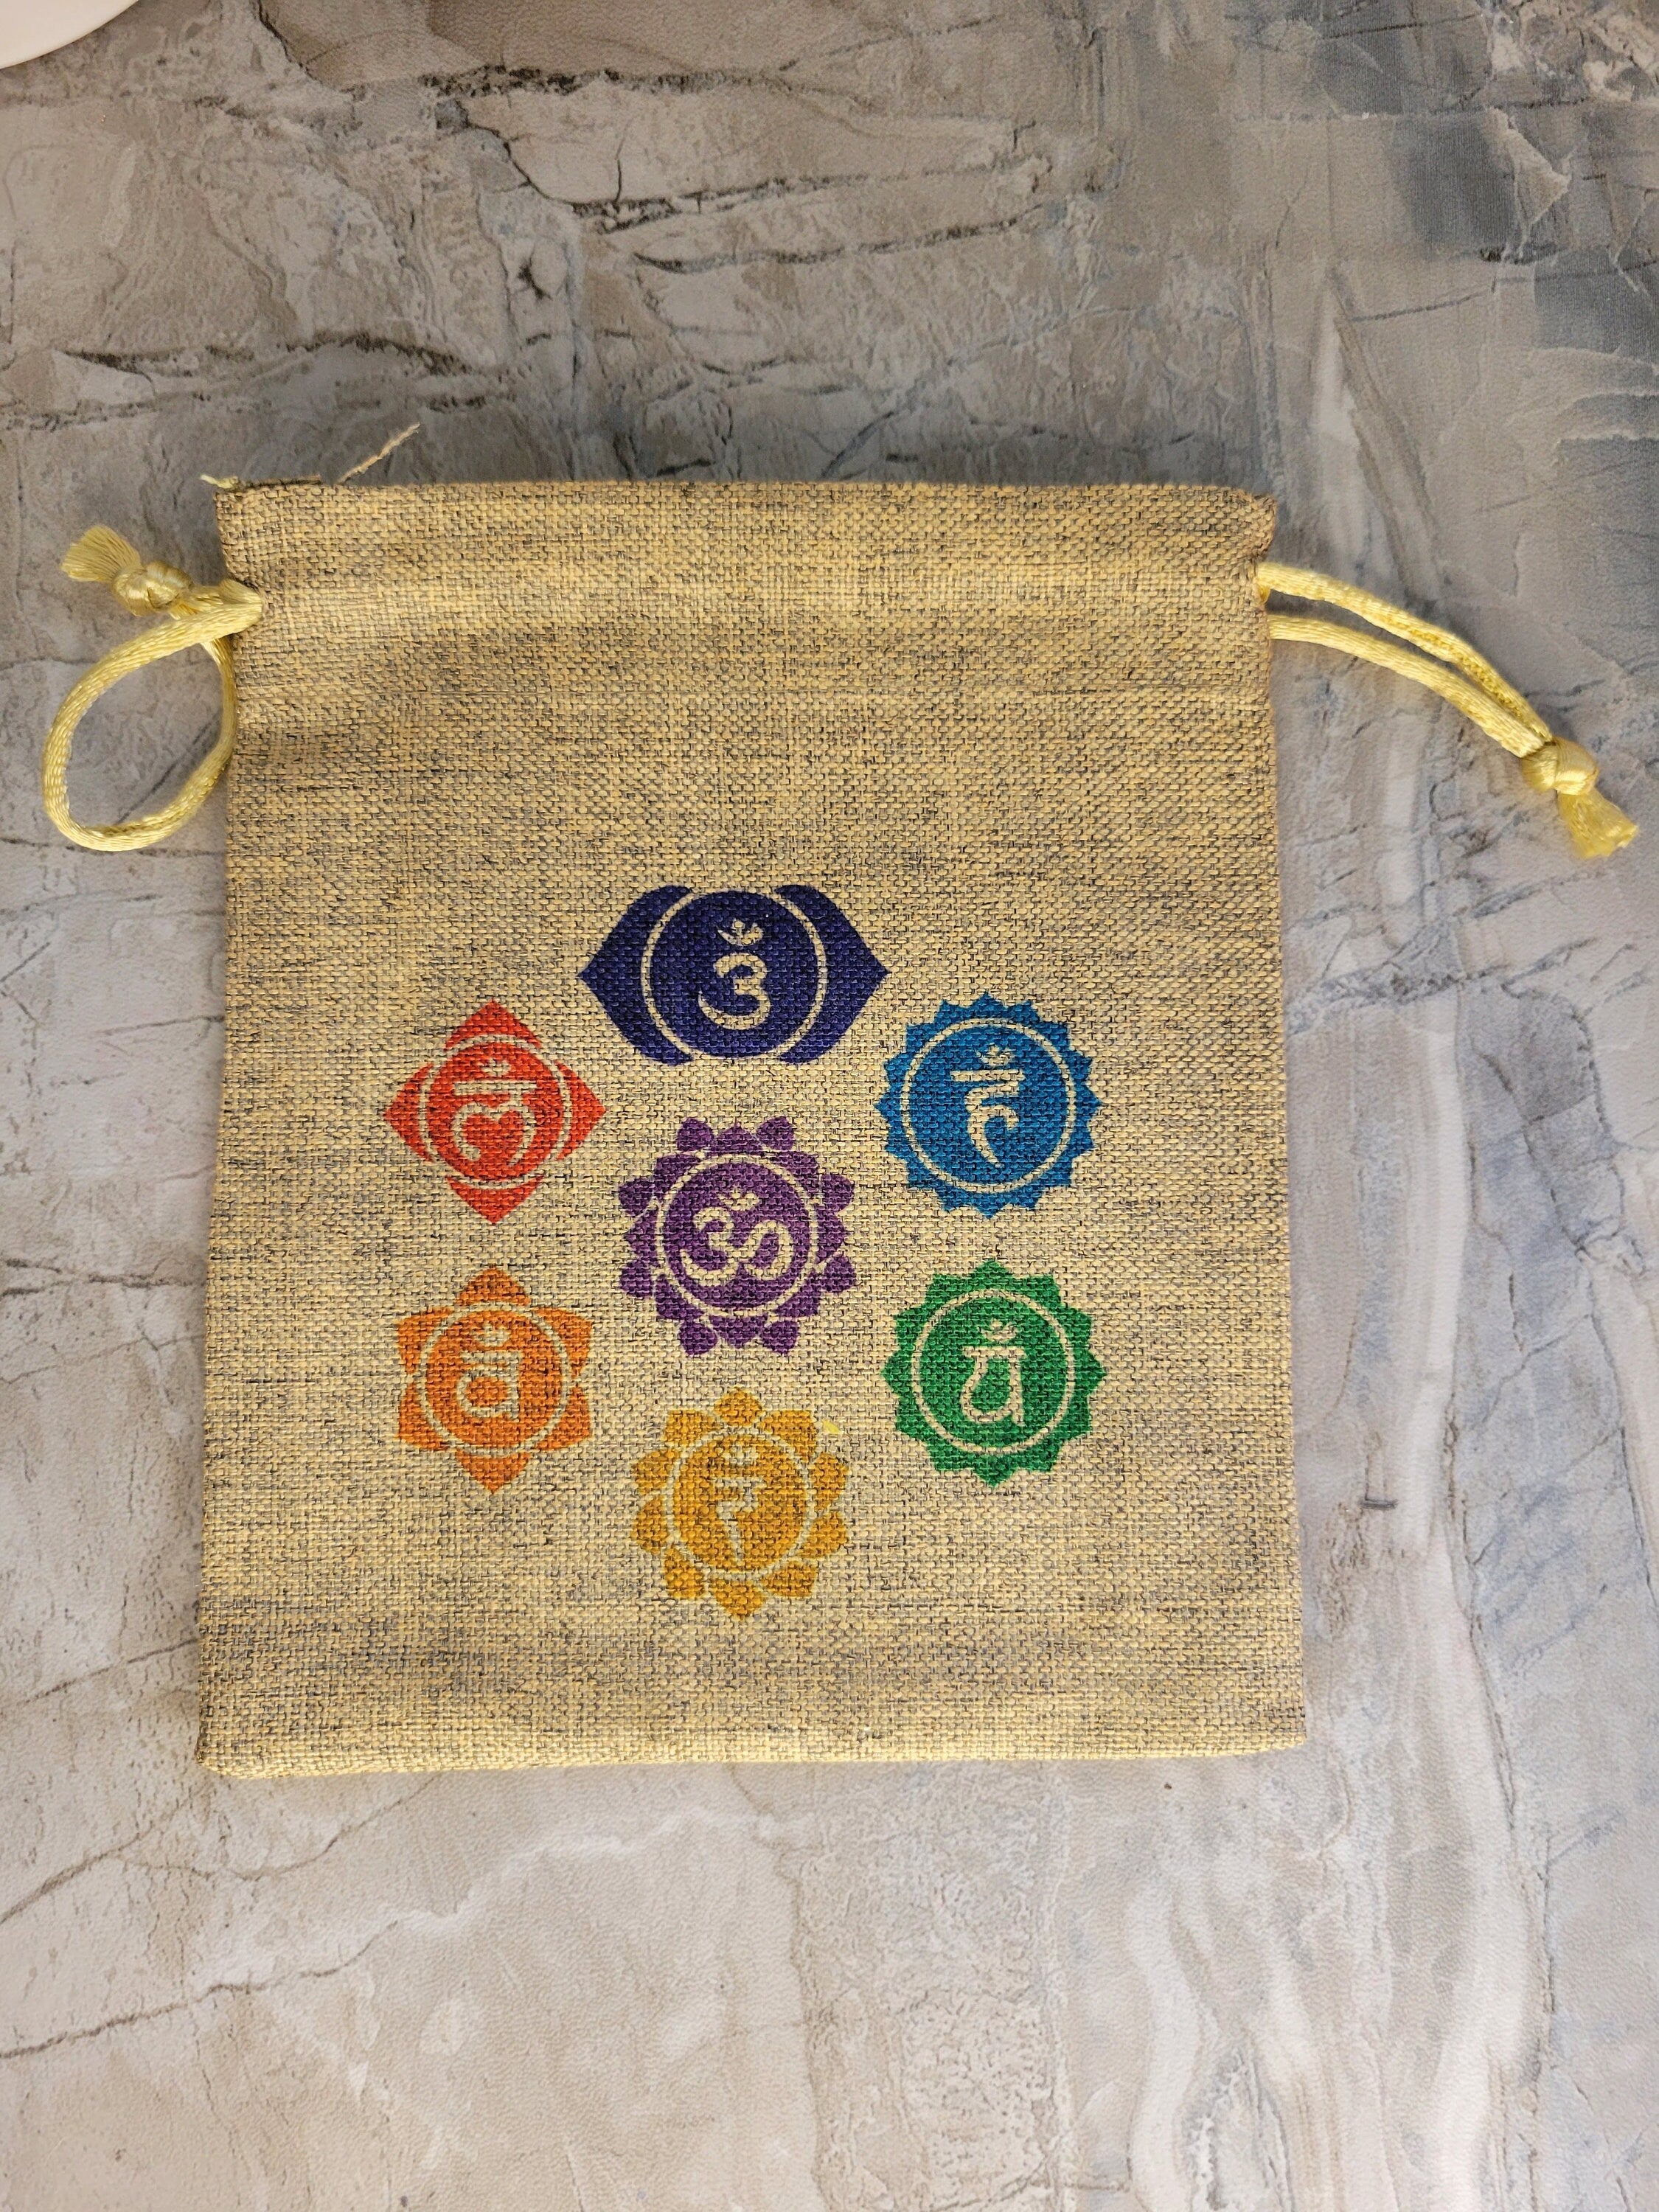 Burlap Handmade Shopping Jute Bag Easy Daily Use Tapestry Natural Beach Bags  | eBay